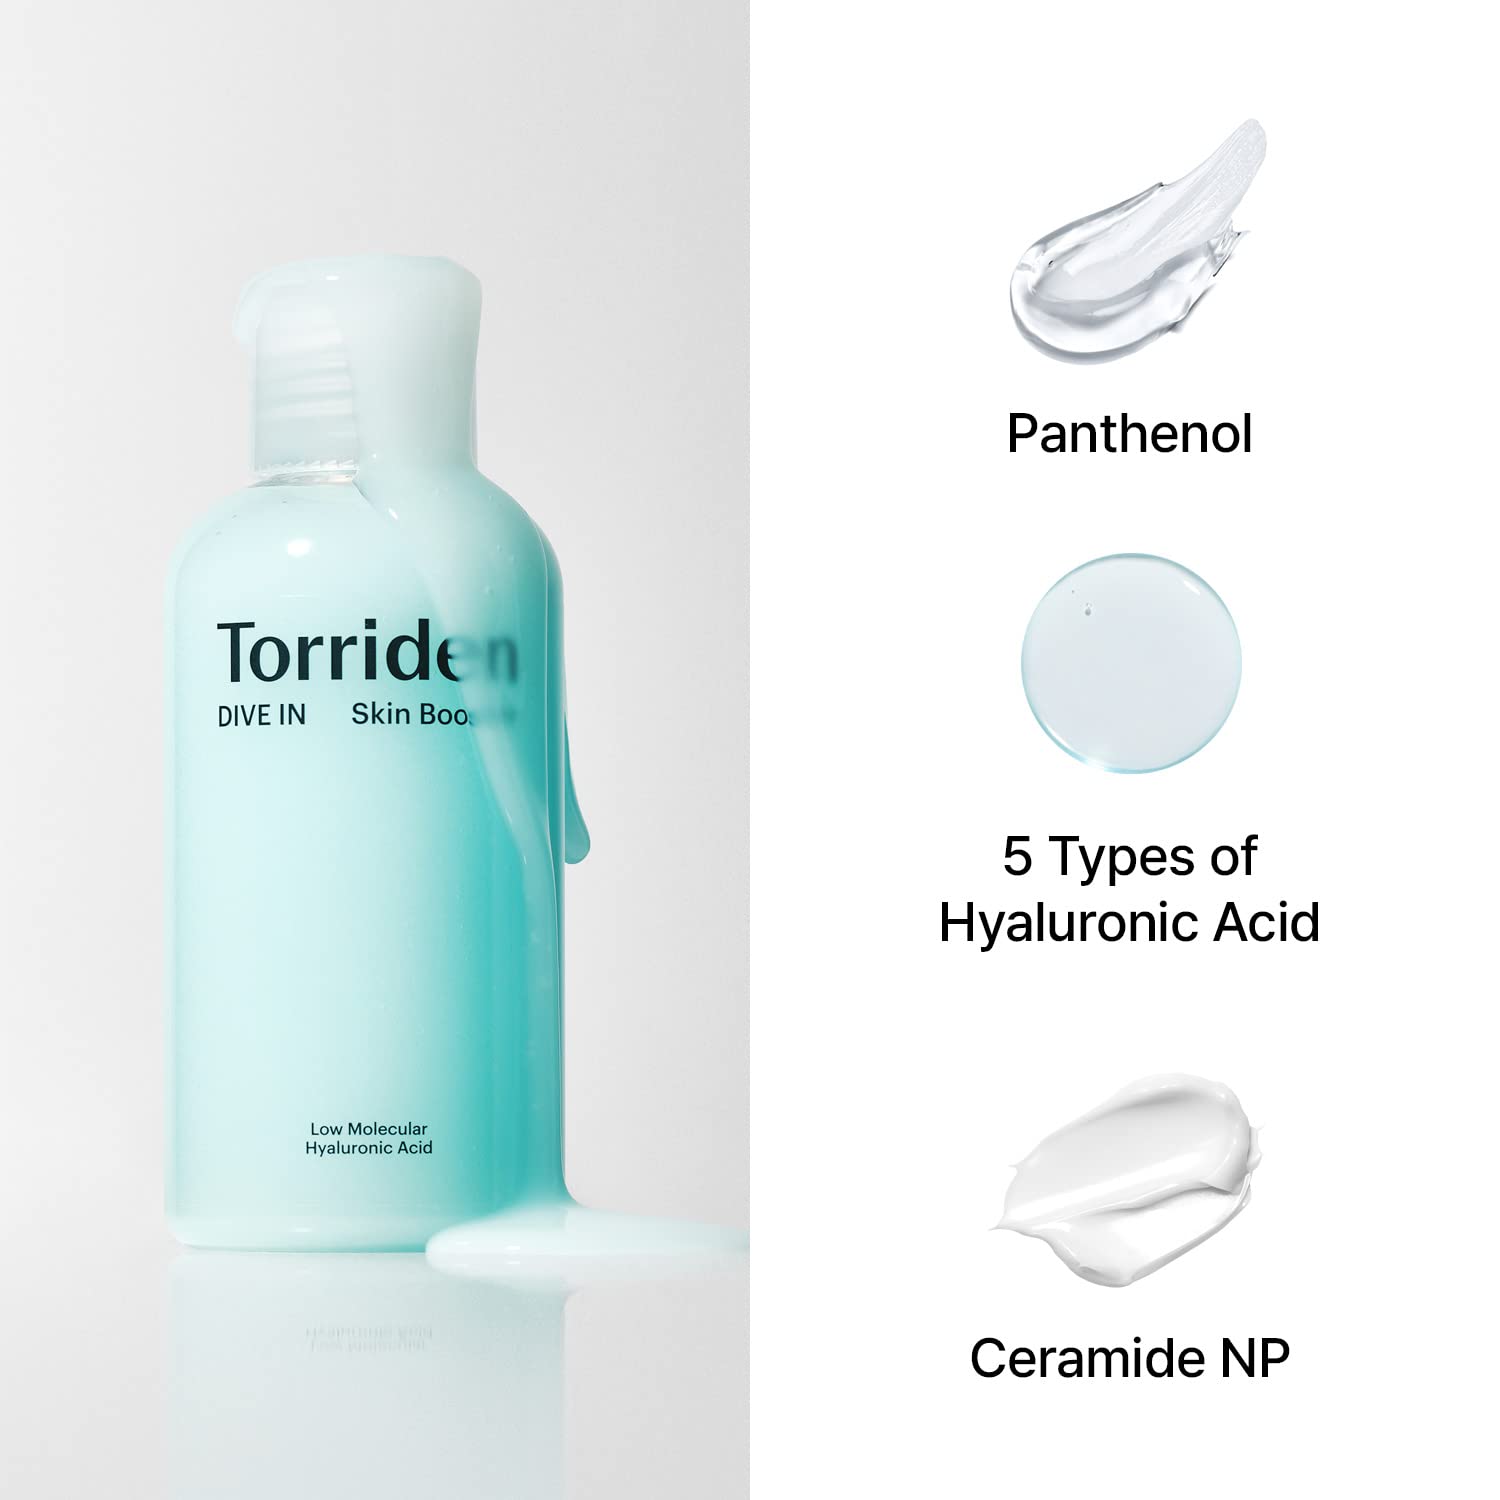 Torriden Dive-in Low Molecule Hyaluronic Acid Skin Booster